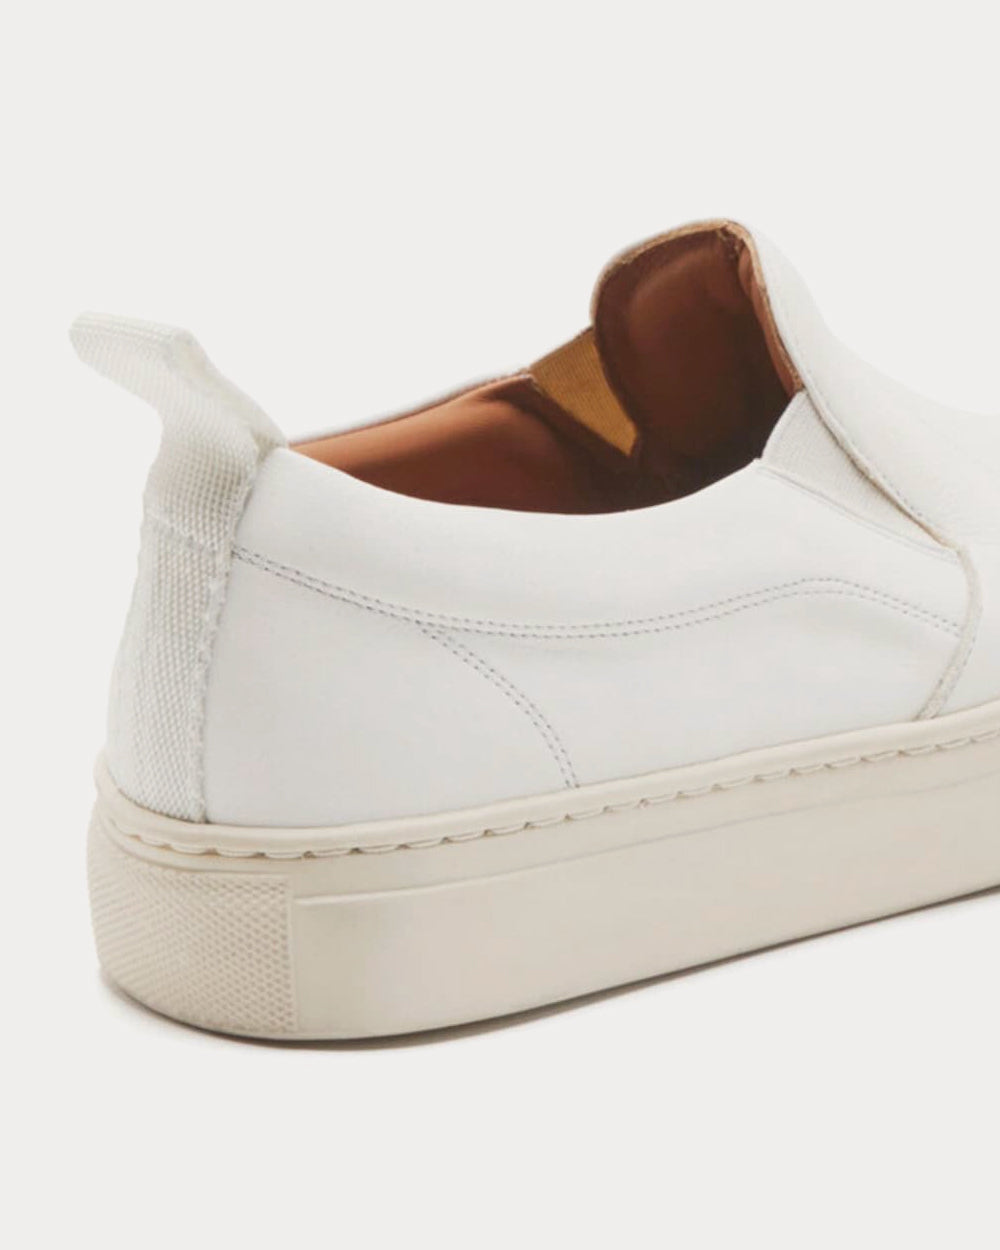 Flattered - Haga Leather White Slip On Sneakers